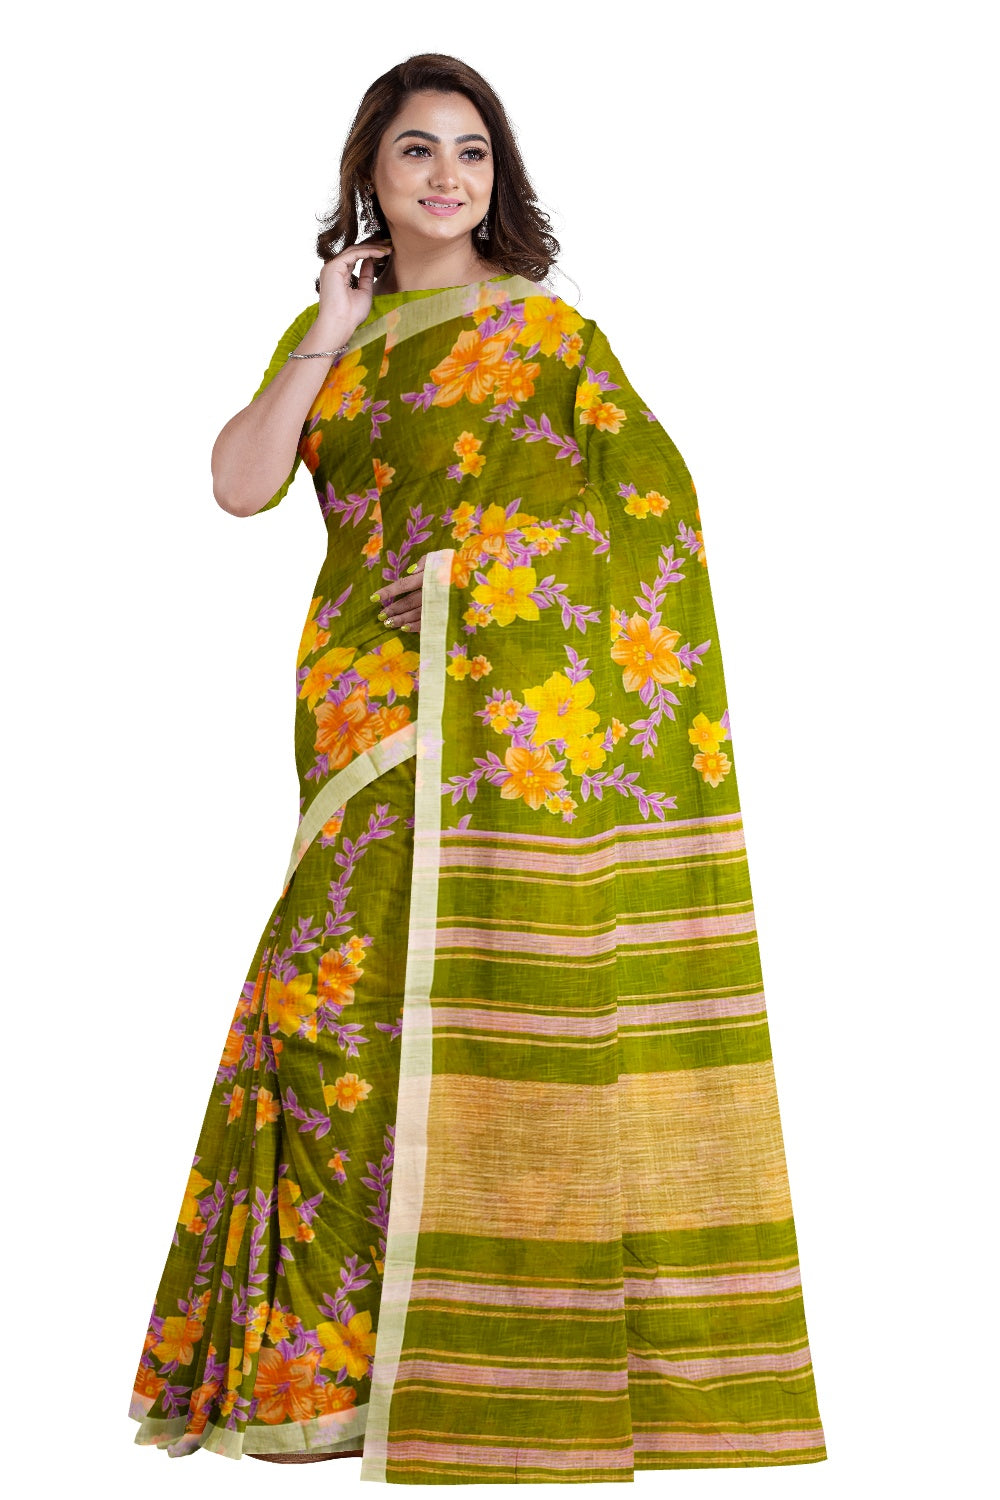 Southloom Linen Green Yellow Floral Designer Saree